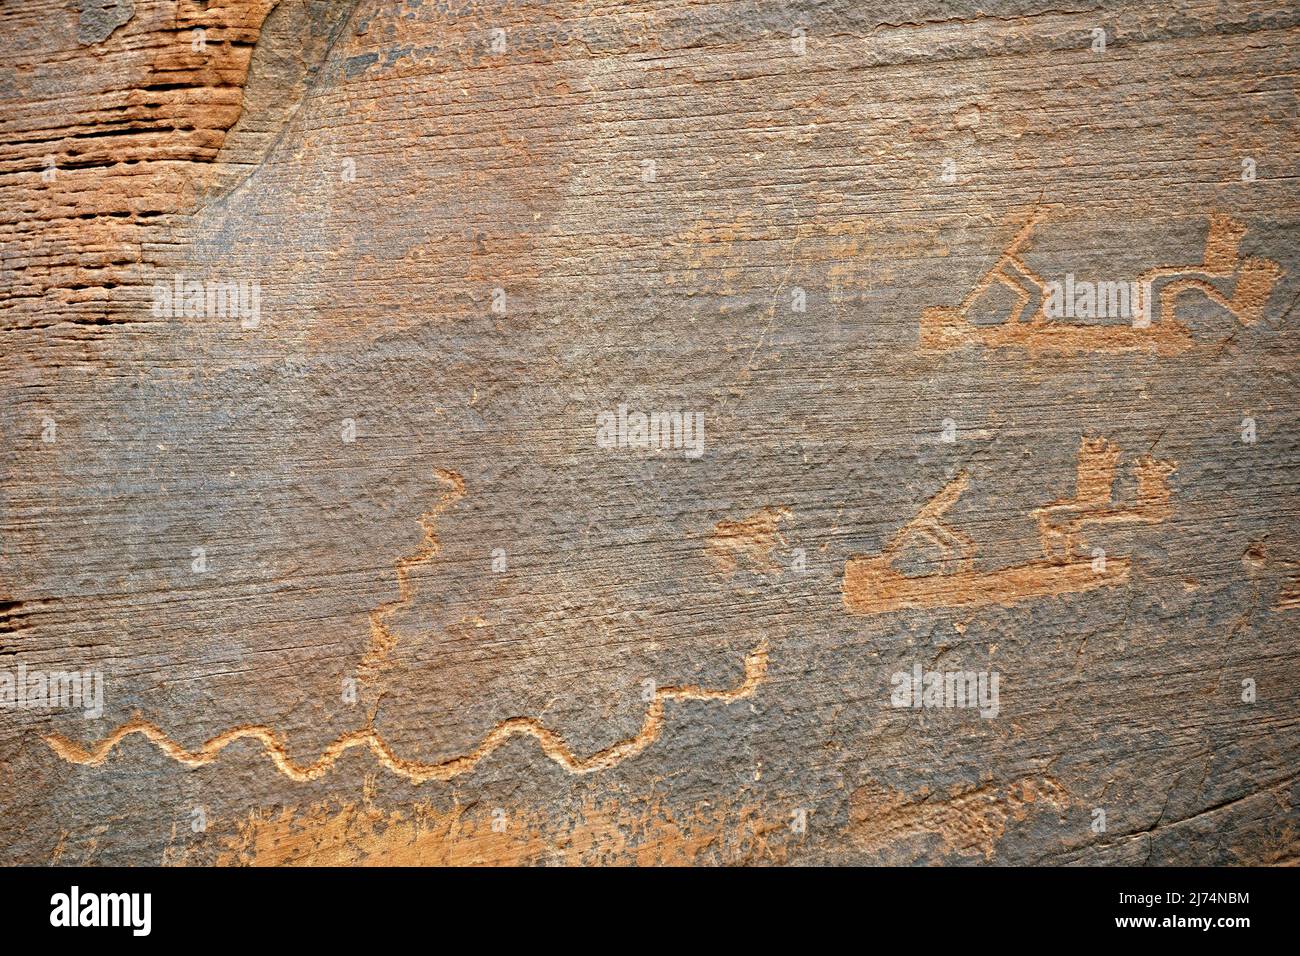 Dipinti rupestri dei nativi americani, circa 1500 anni, USA, Arizona, Monument Valley National Park Foto Stock